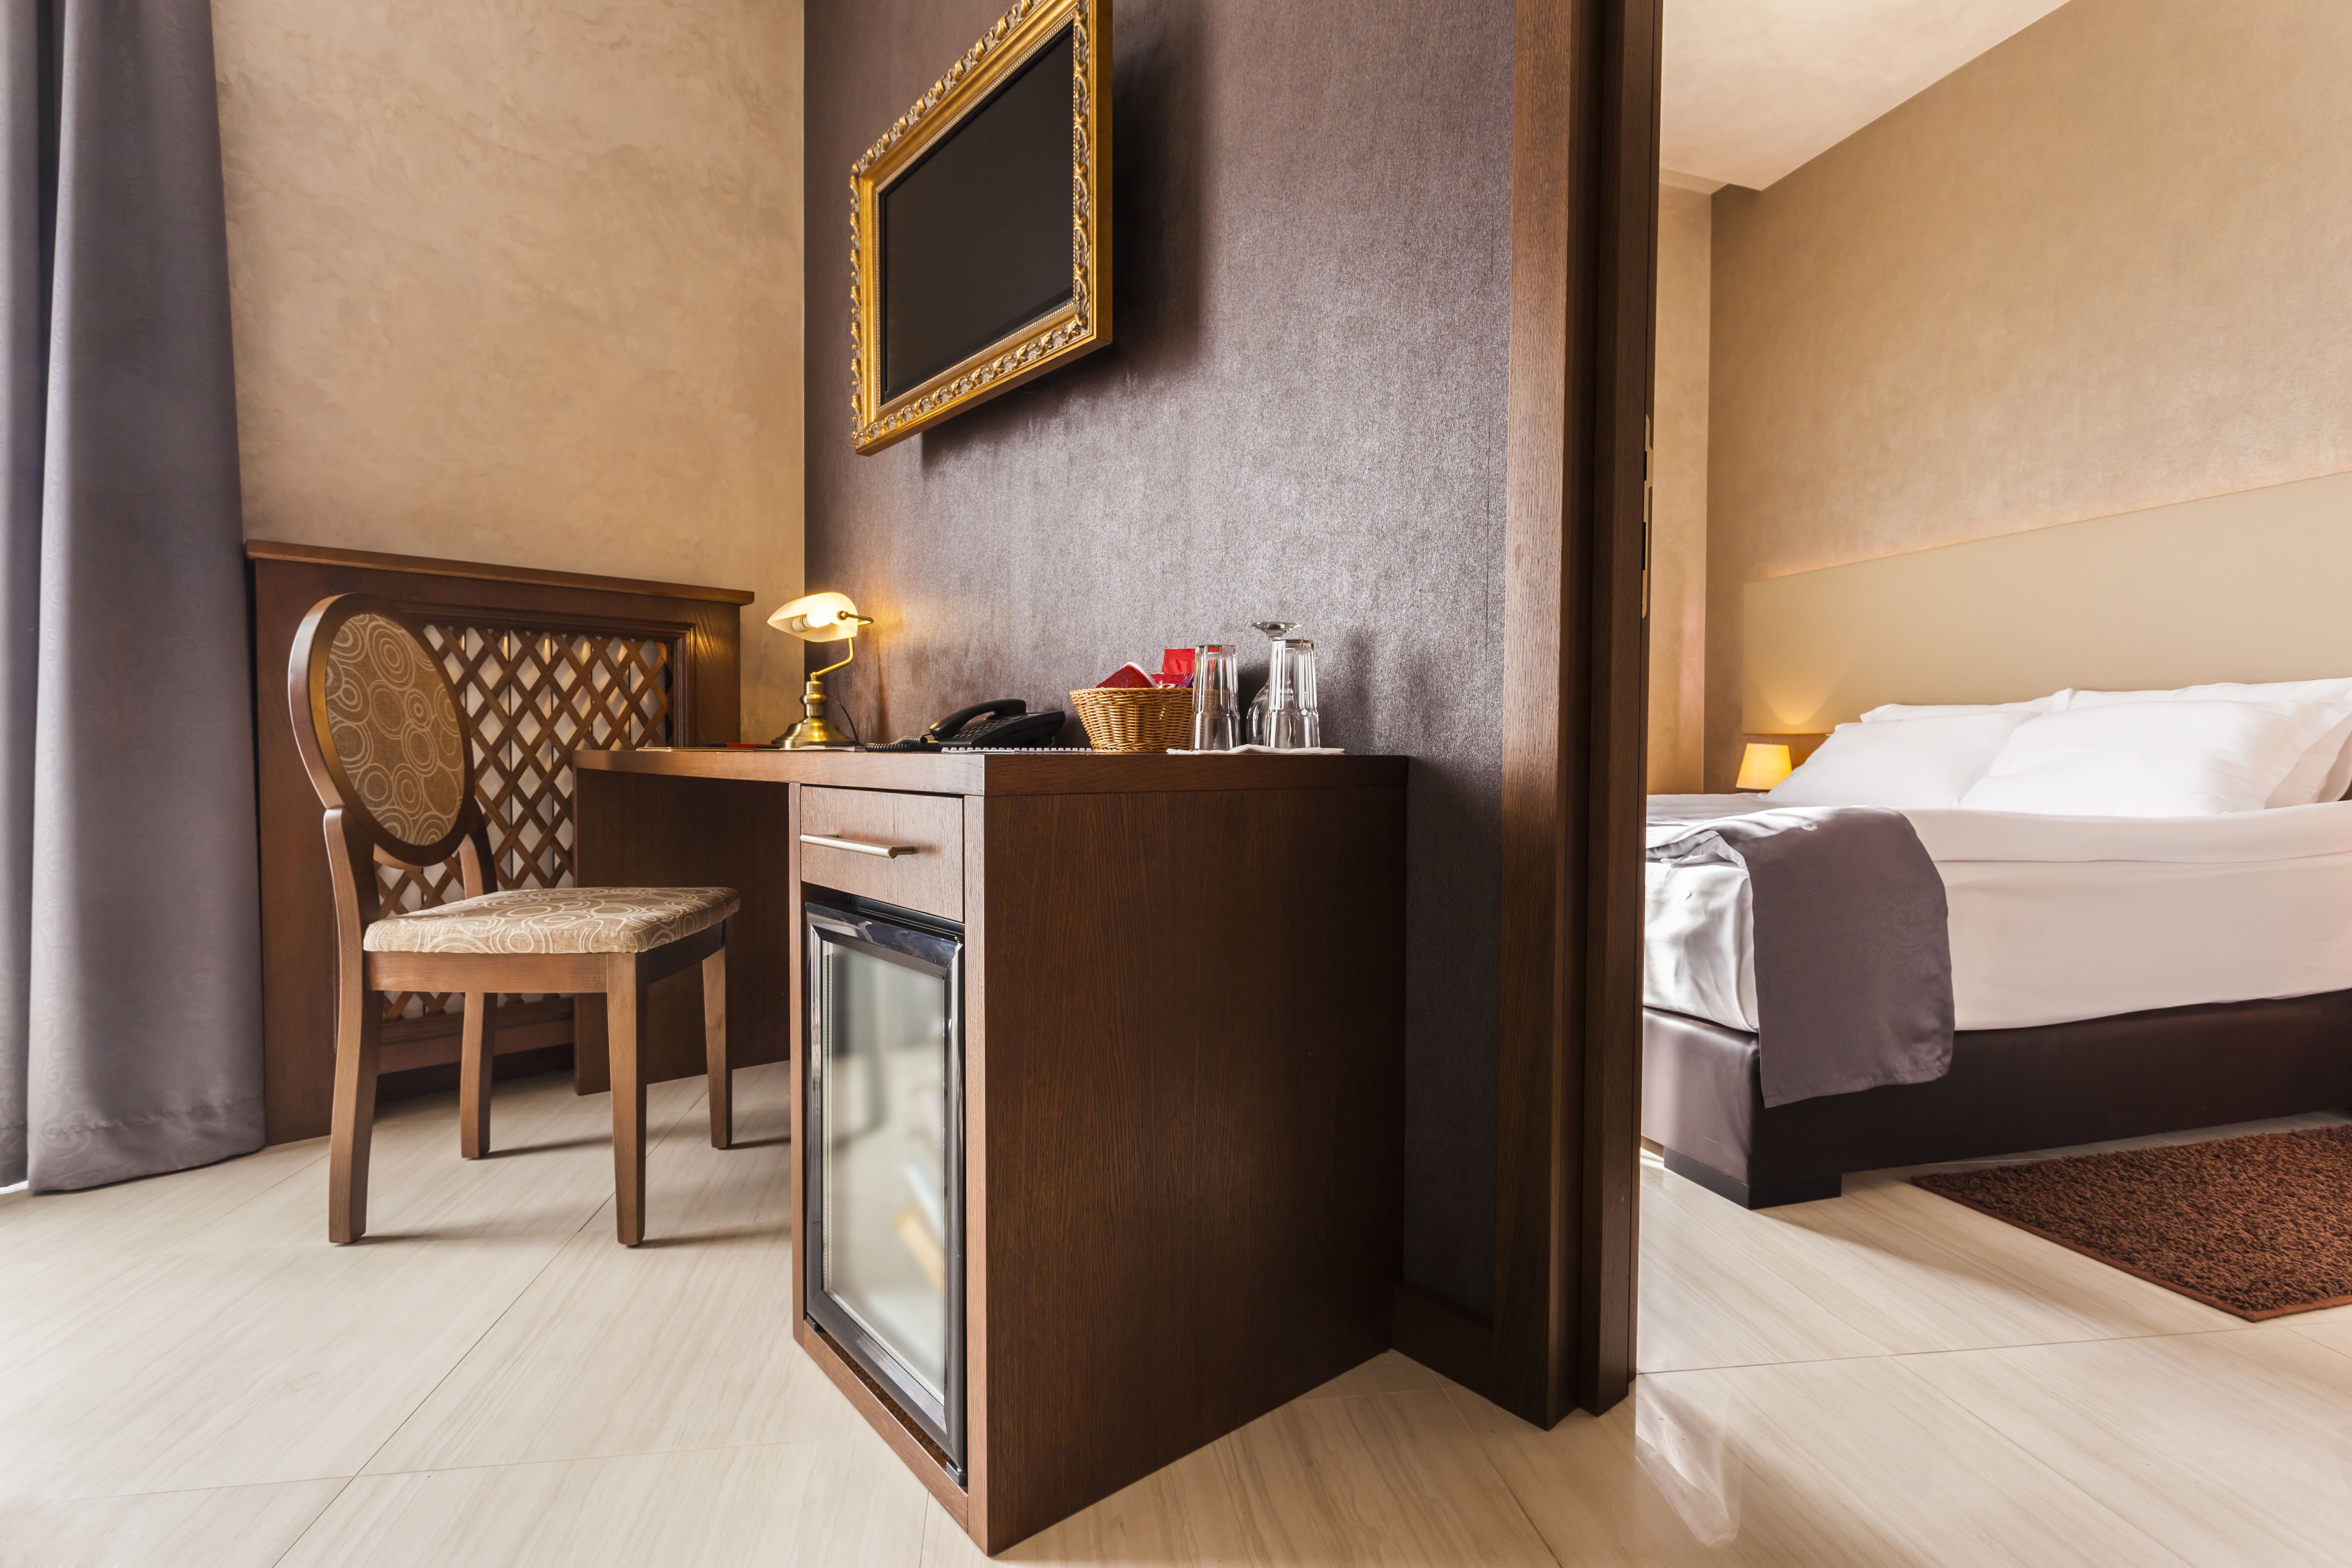 Luxury hotel room interior with mini bar in brown tones. | Source: Shutterstock